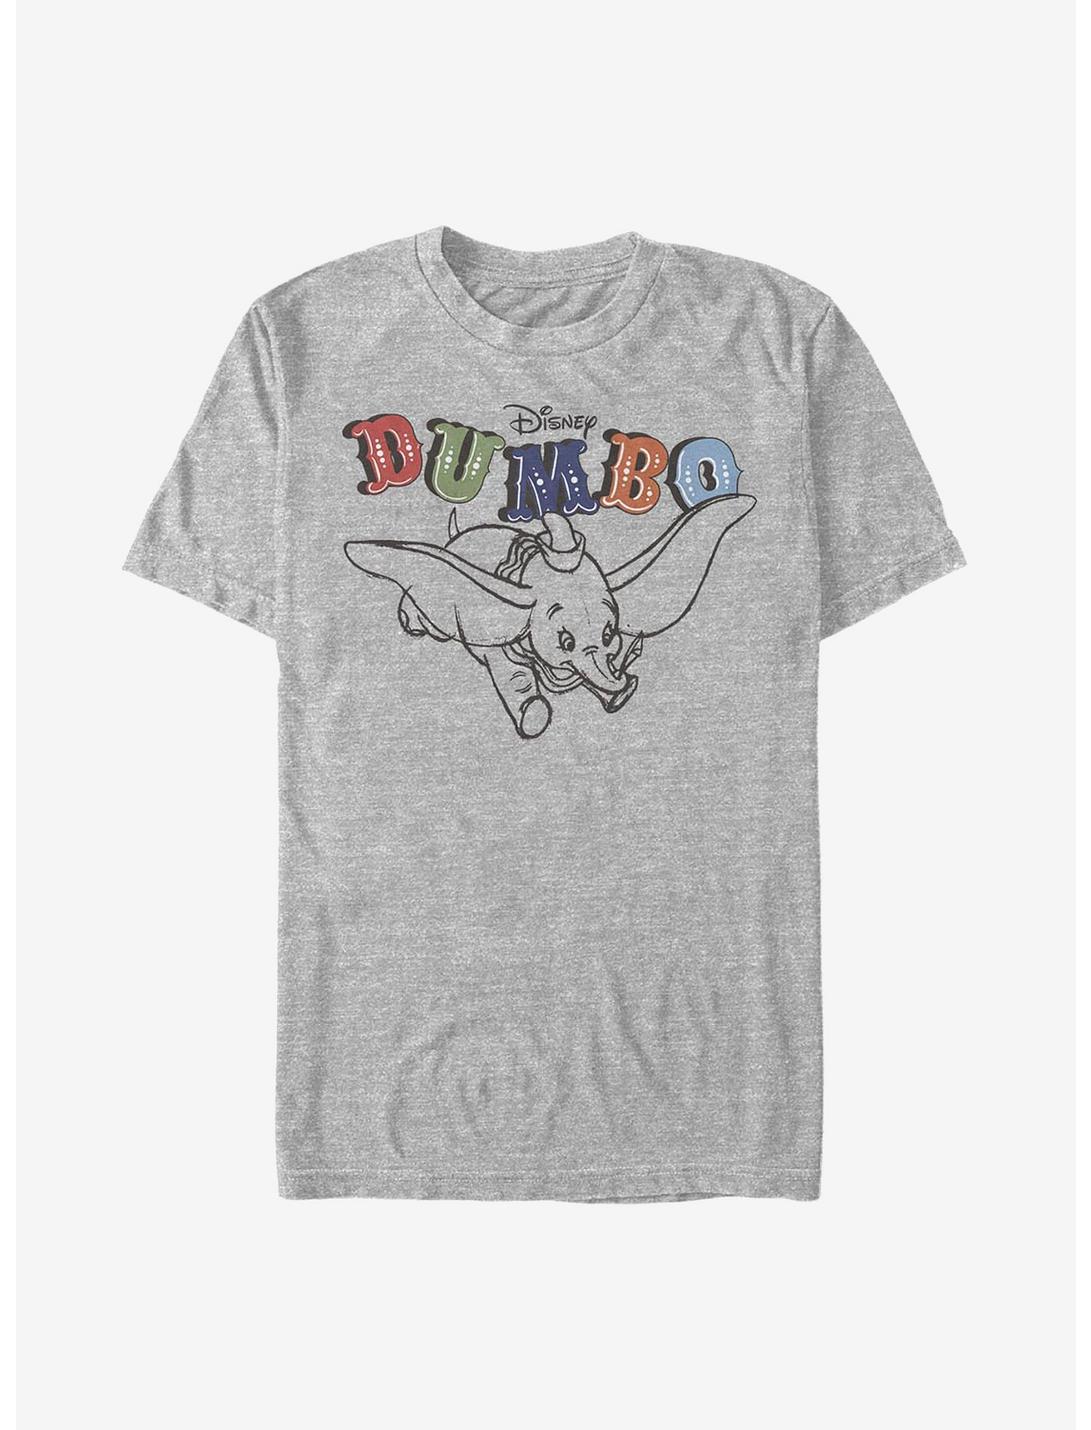 Disney Dumbo Flying Circus T-Shirt, ATH HTR, hi-res